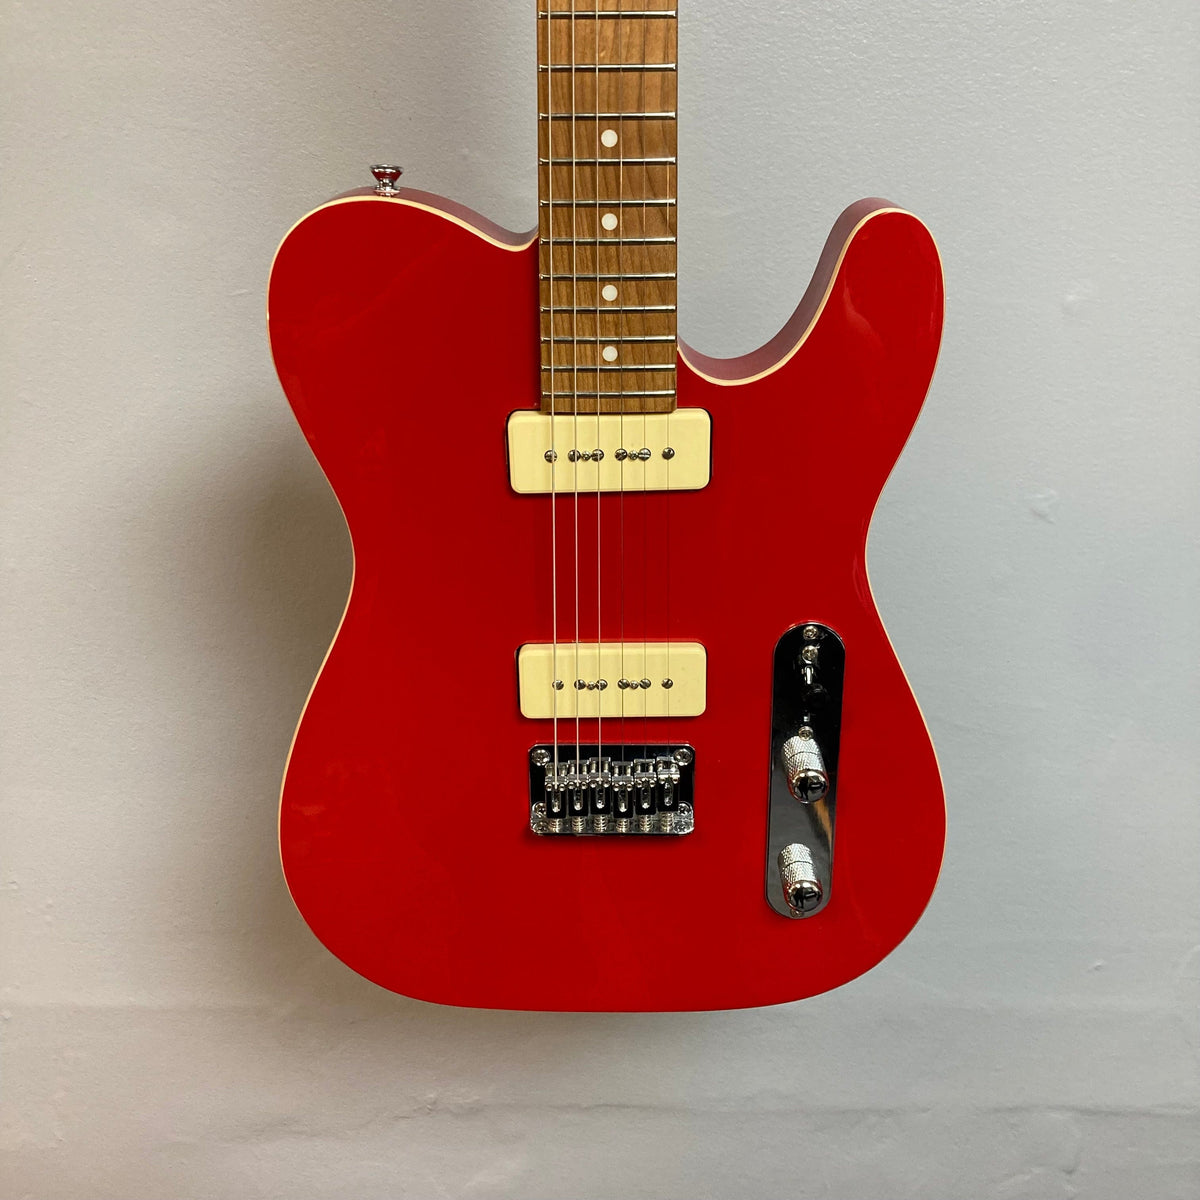 Michael Kelly 59 Tele P90 Gloss Red Prototype Guitars on...